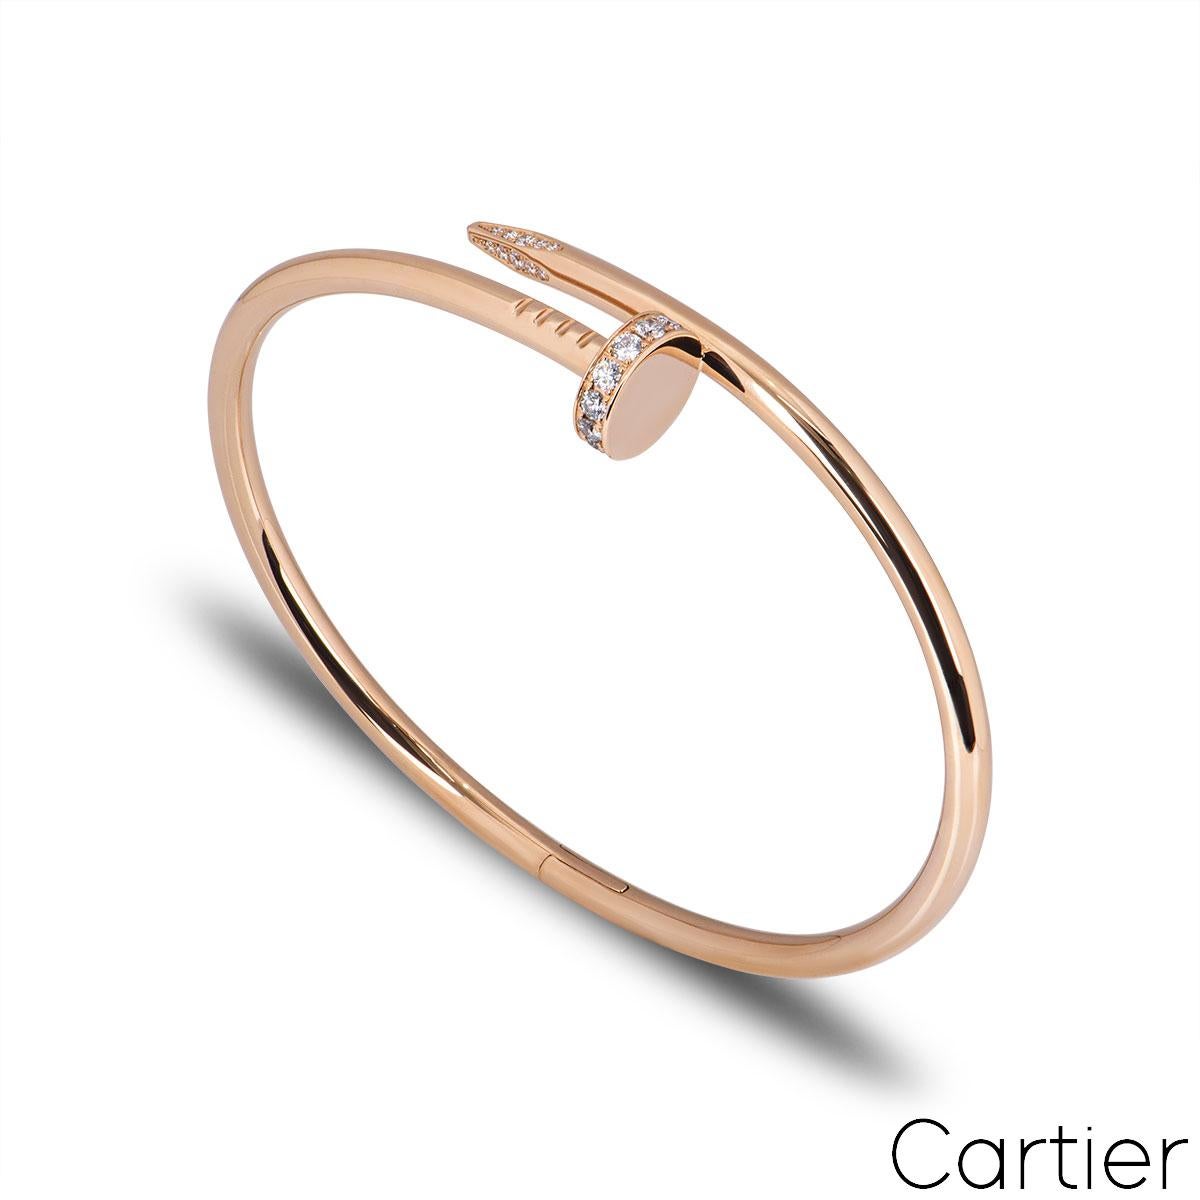 Cartier Rose Gold Diamond Juste Un Clou Bracelet Size 17 B6048517 In Excellent Condition For Sale In London, GB